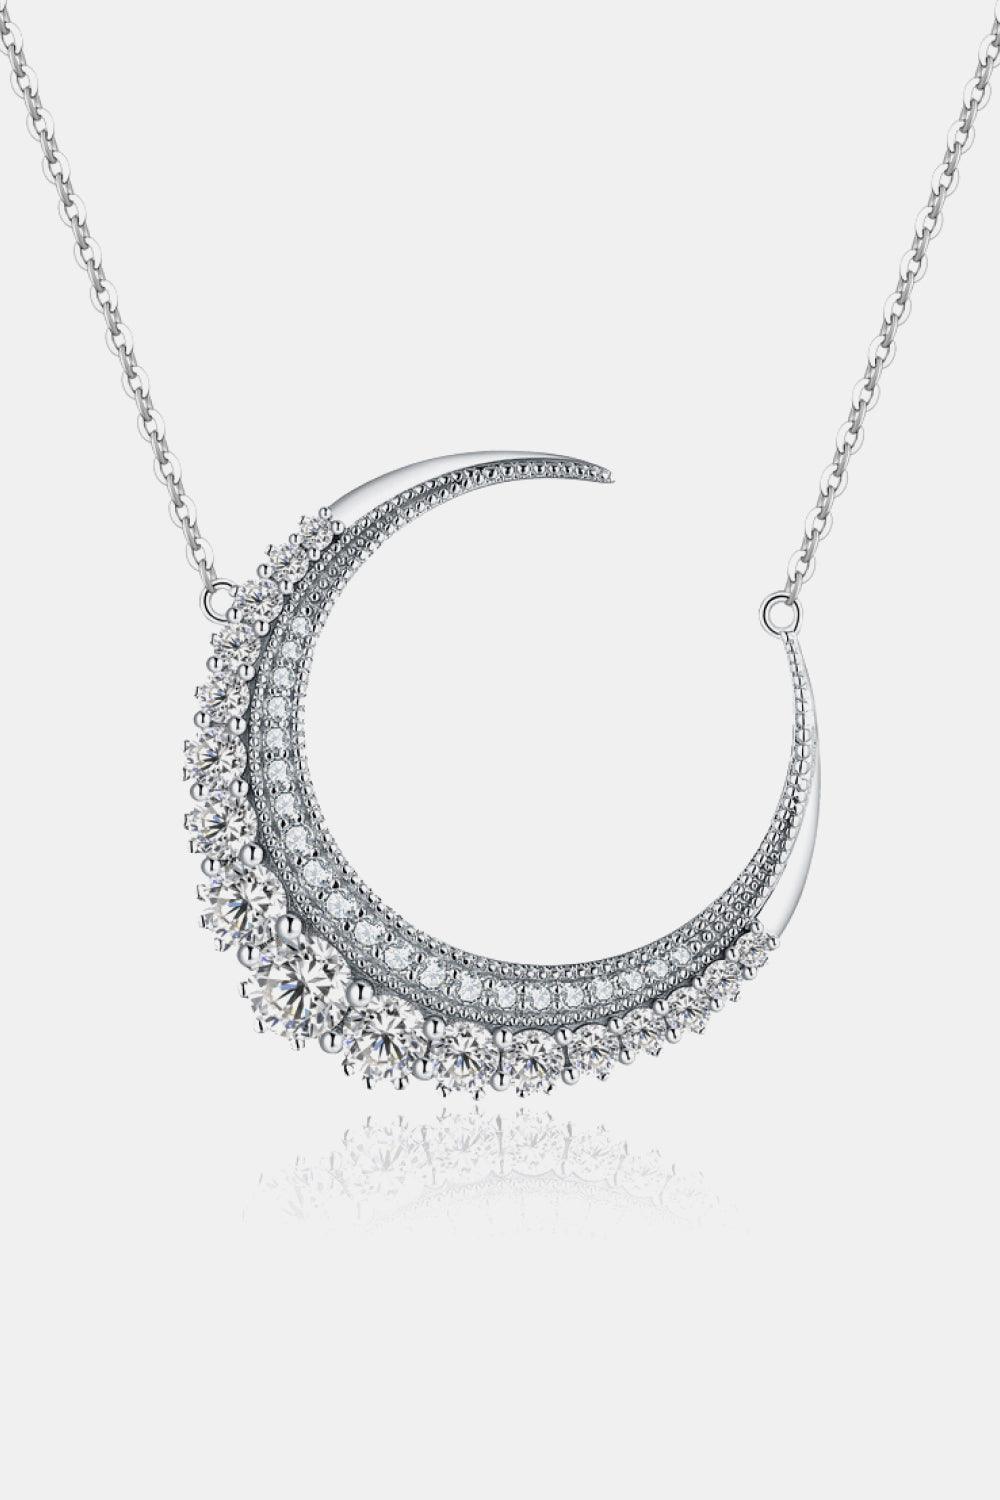 1.8 Carat Moissanite Crescent Moon Shape Pendant Necklace - Lab Fashion, Home & Health